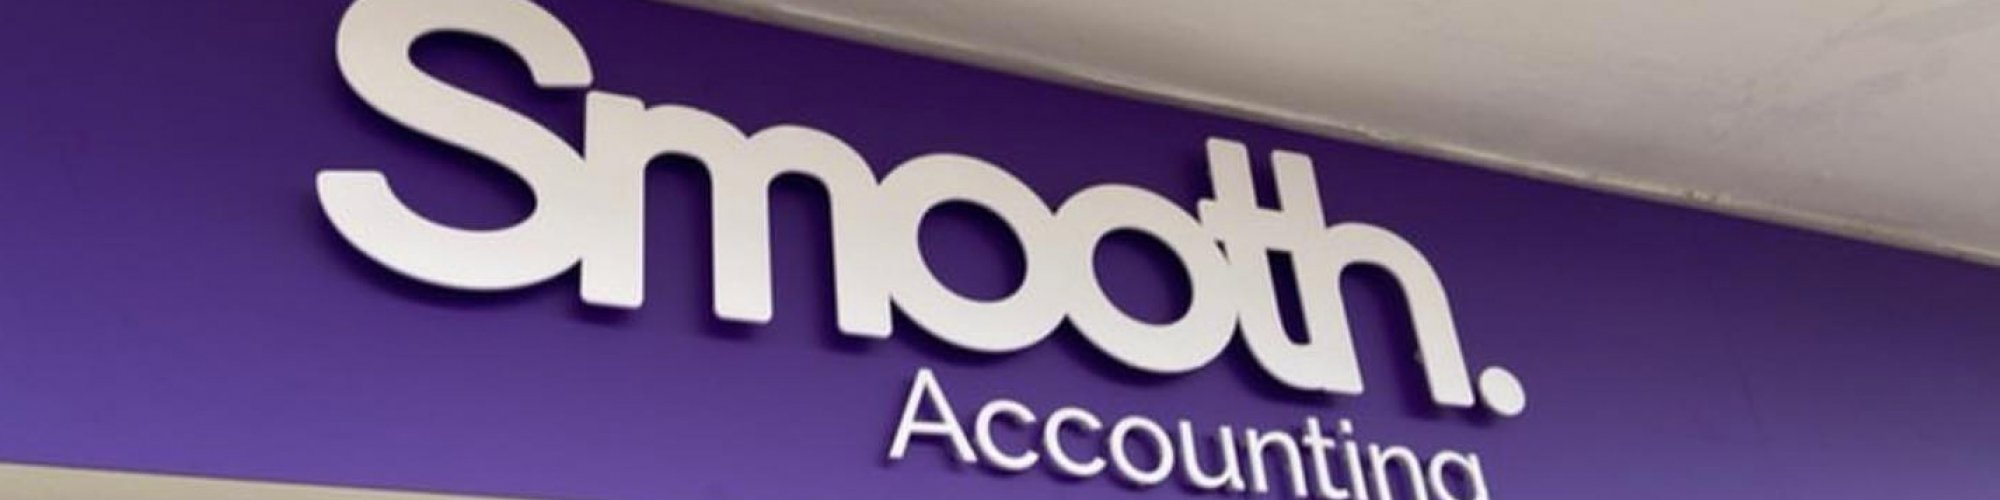 Smooth Accounting Ltd